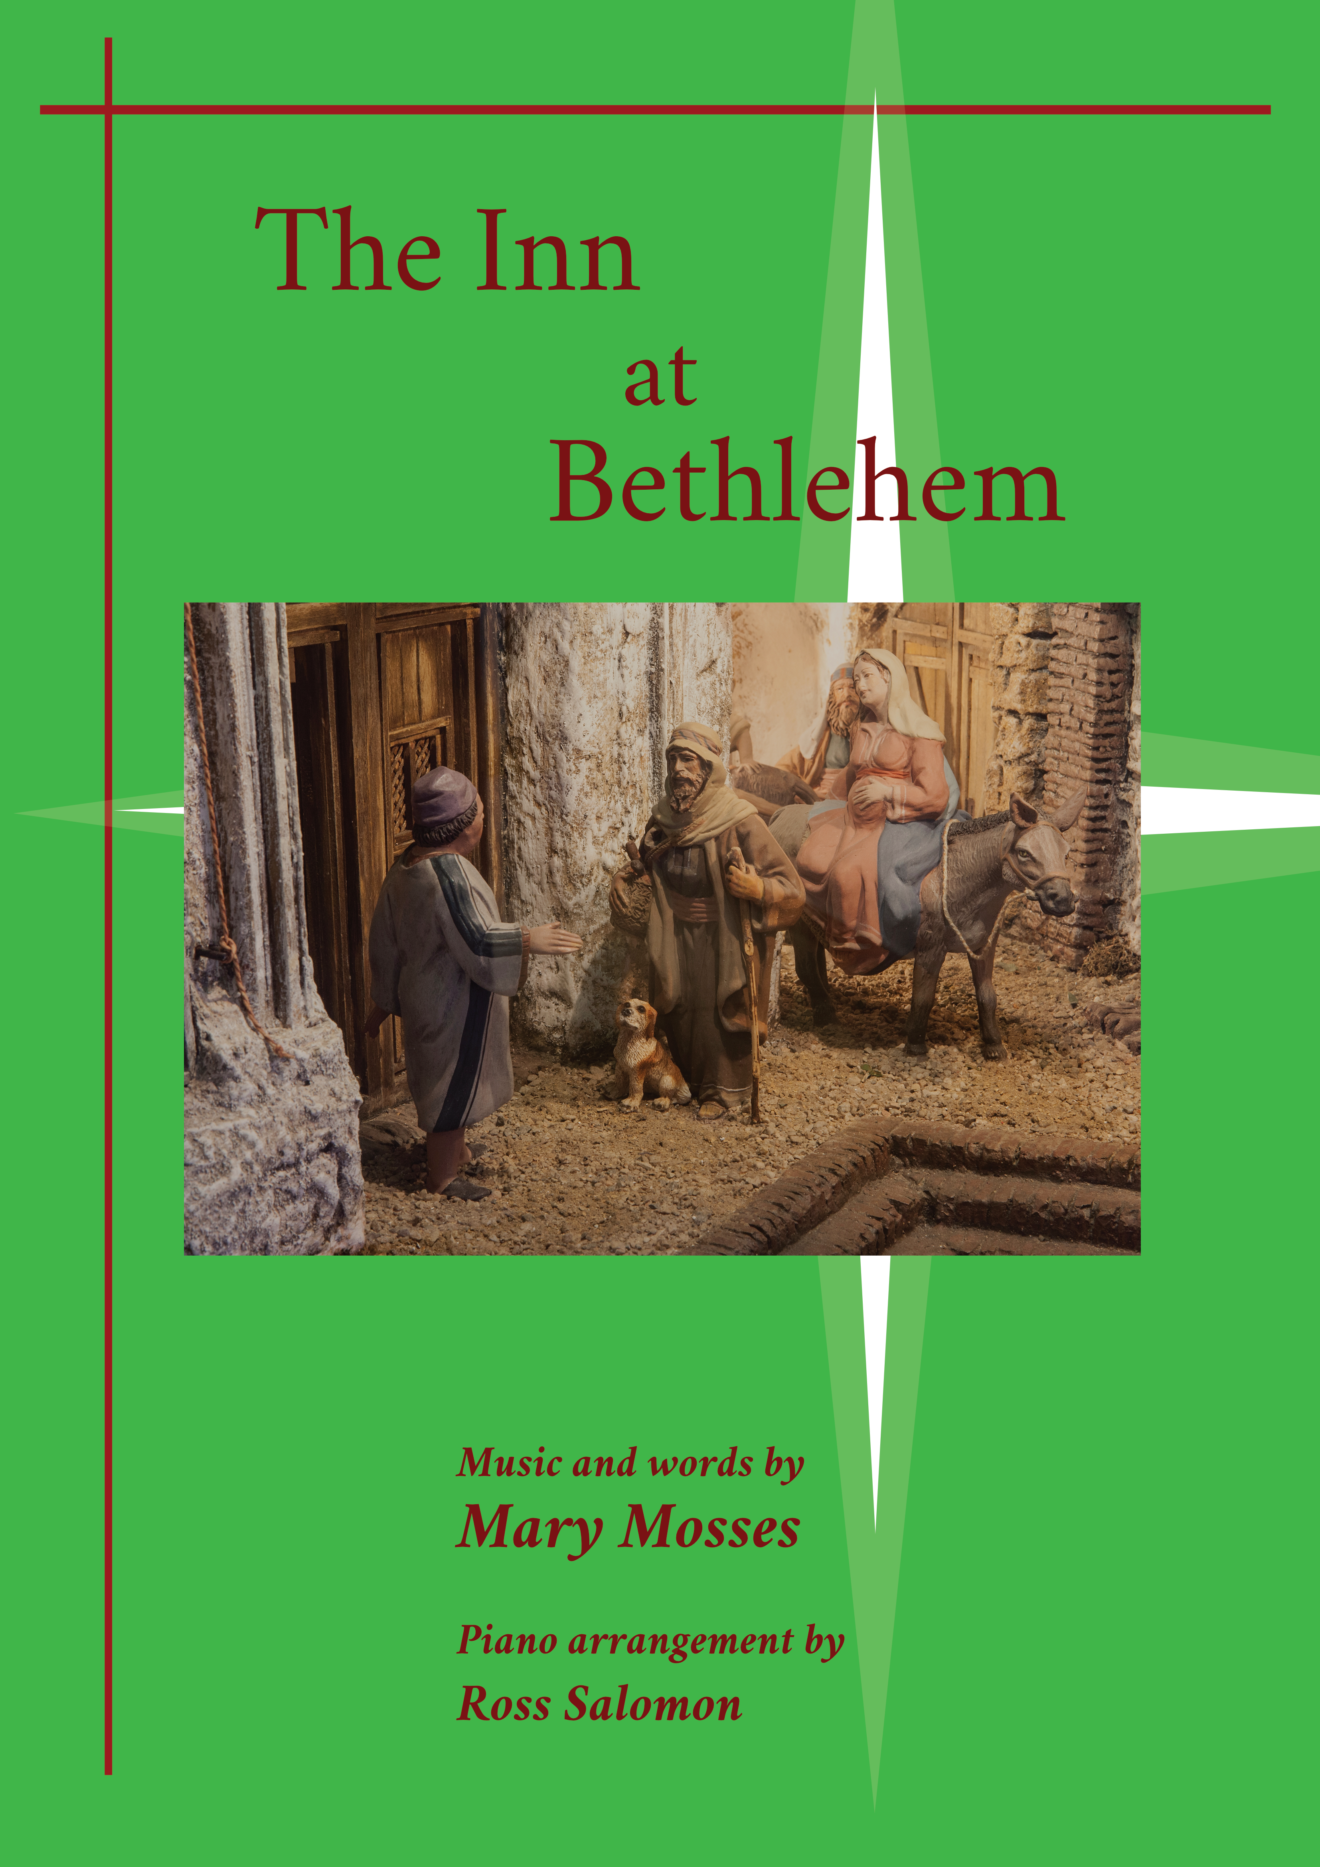 The Inn at Bethlehem